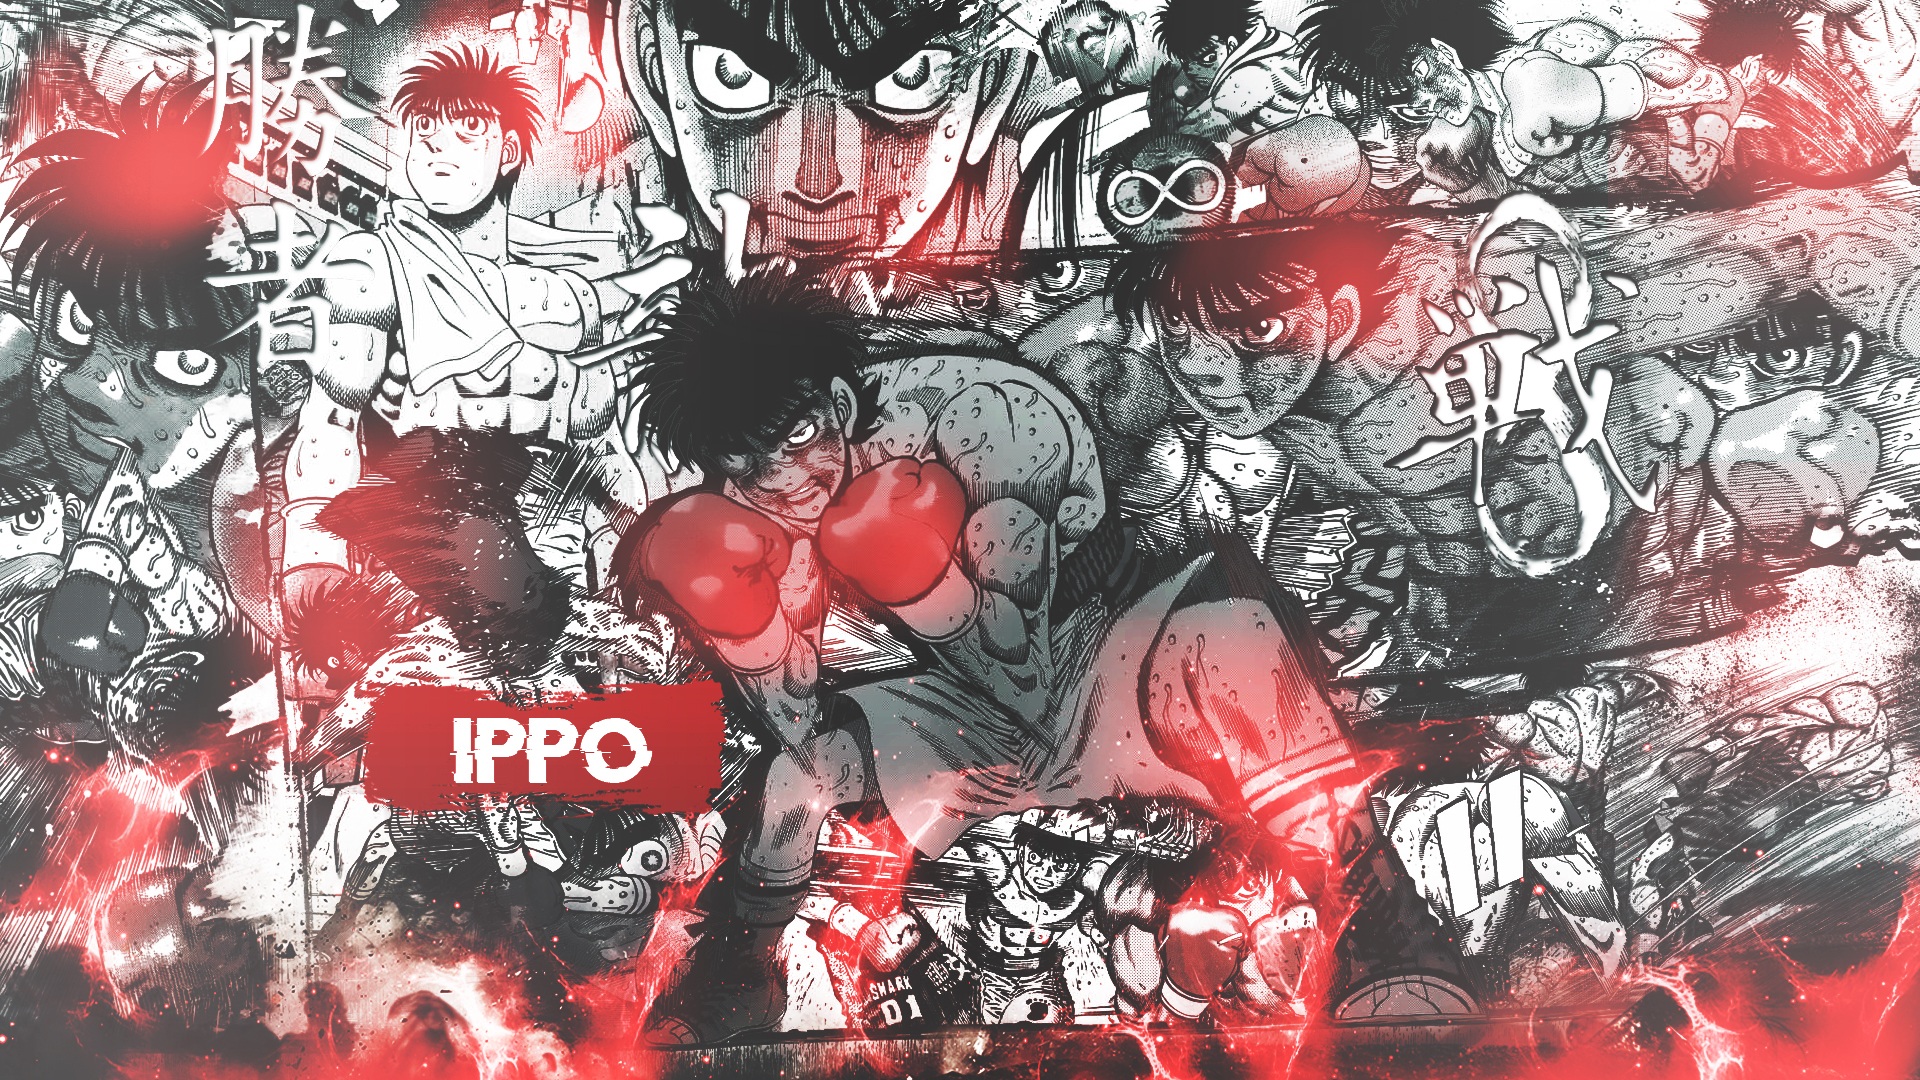 hajime no ippo wallpaper by SCORPION630 - Download on ZEDGE™